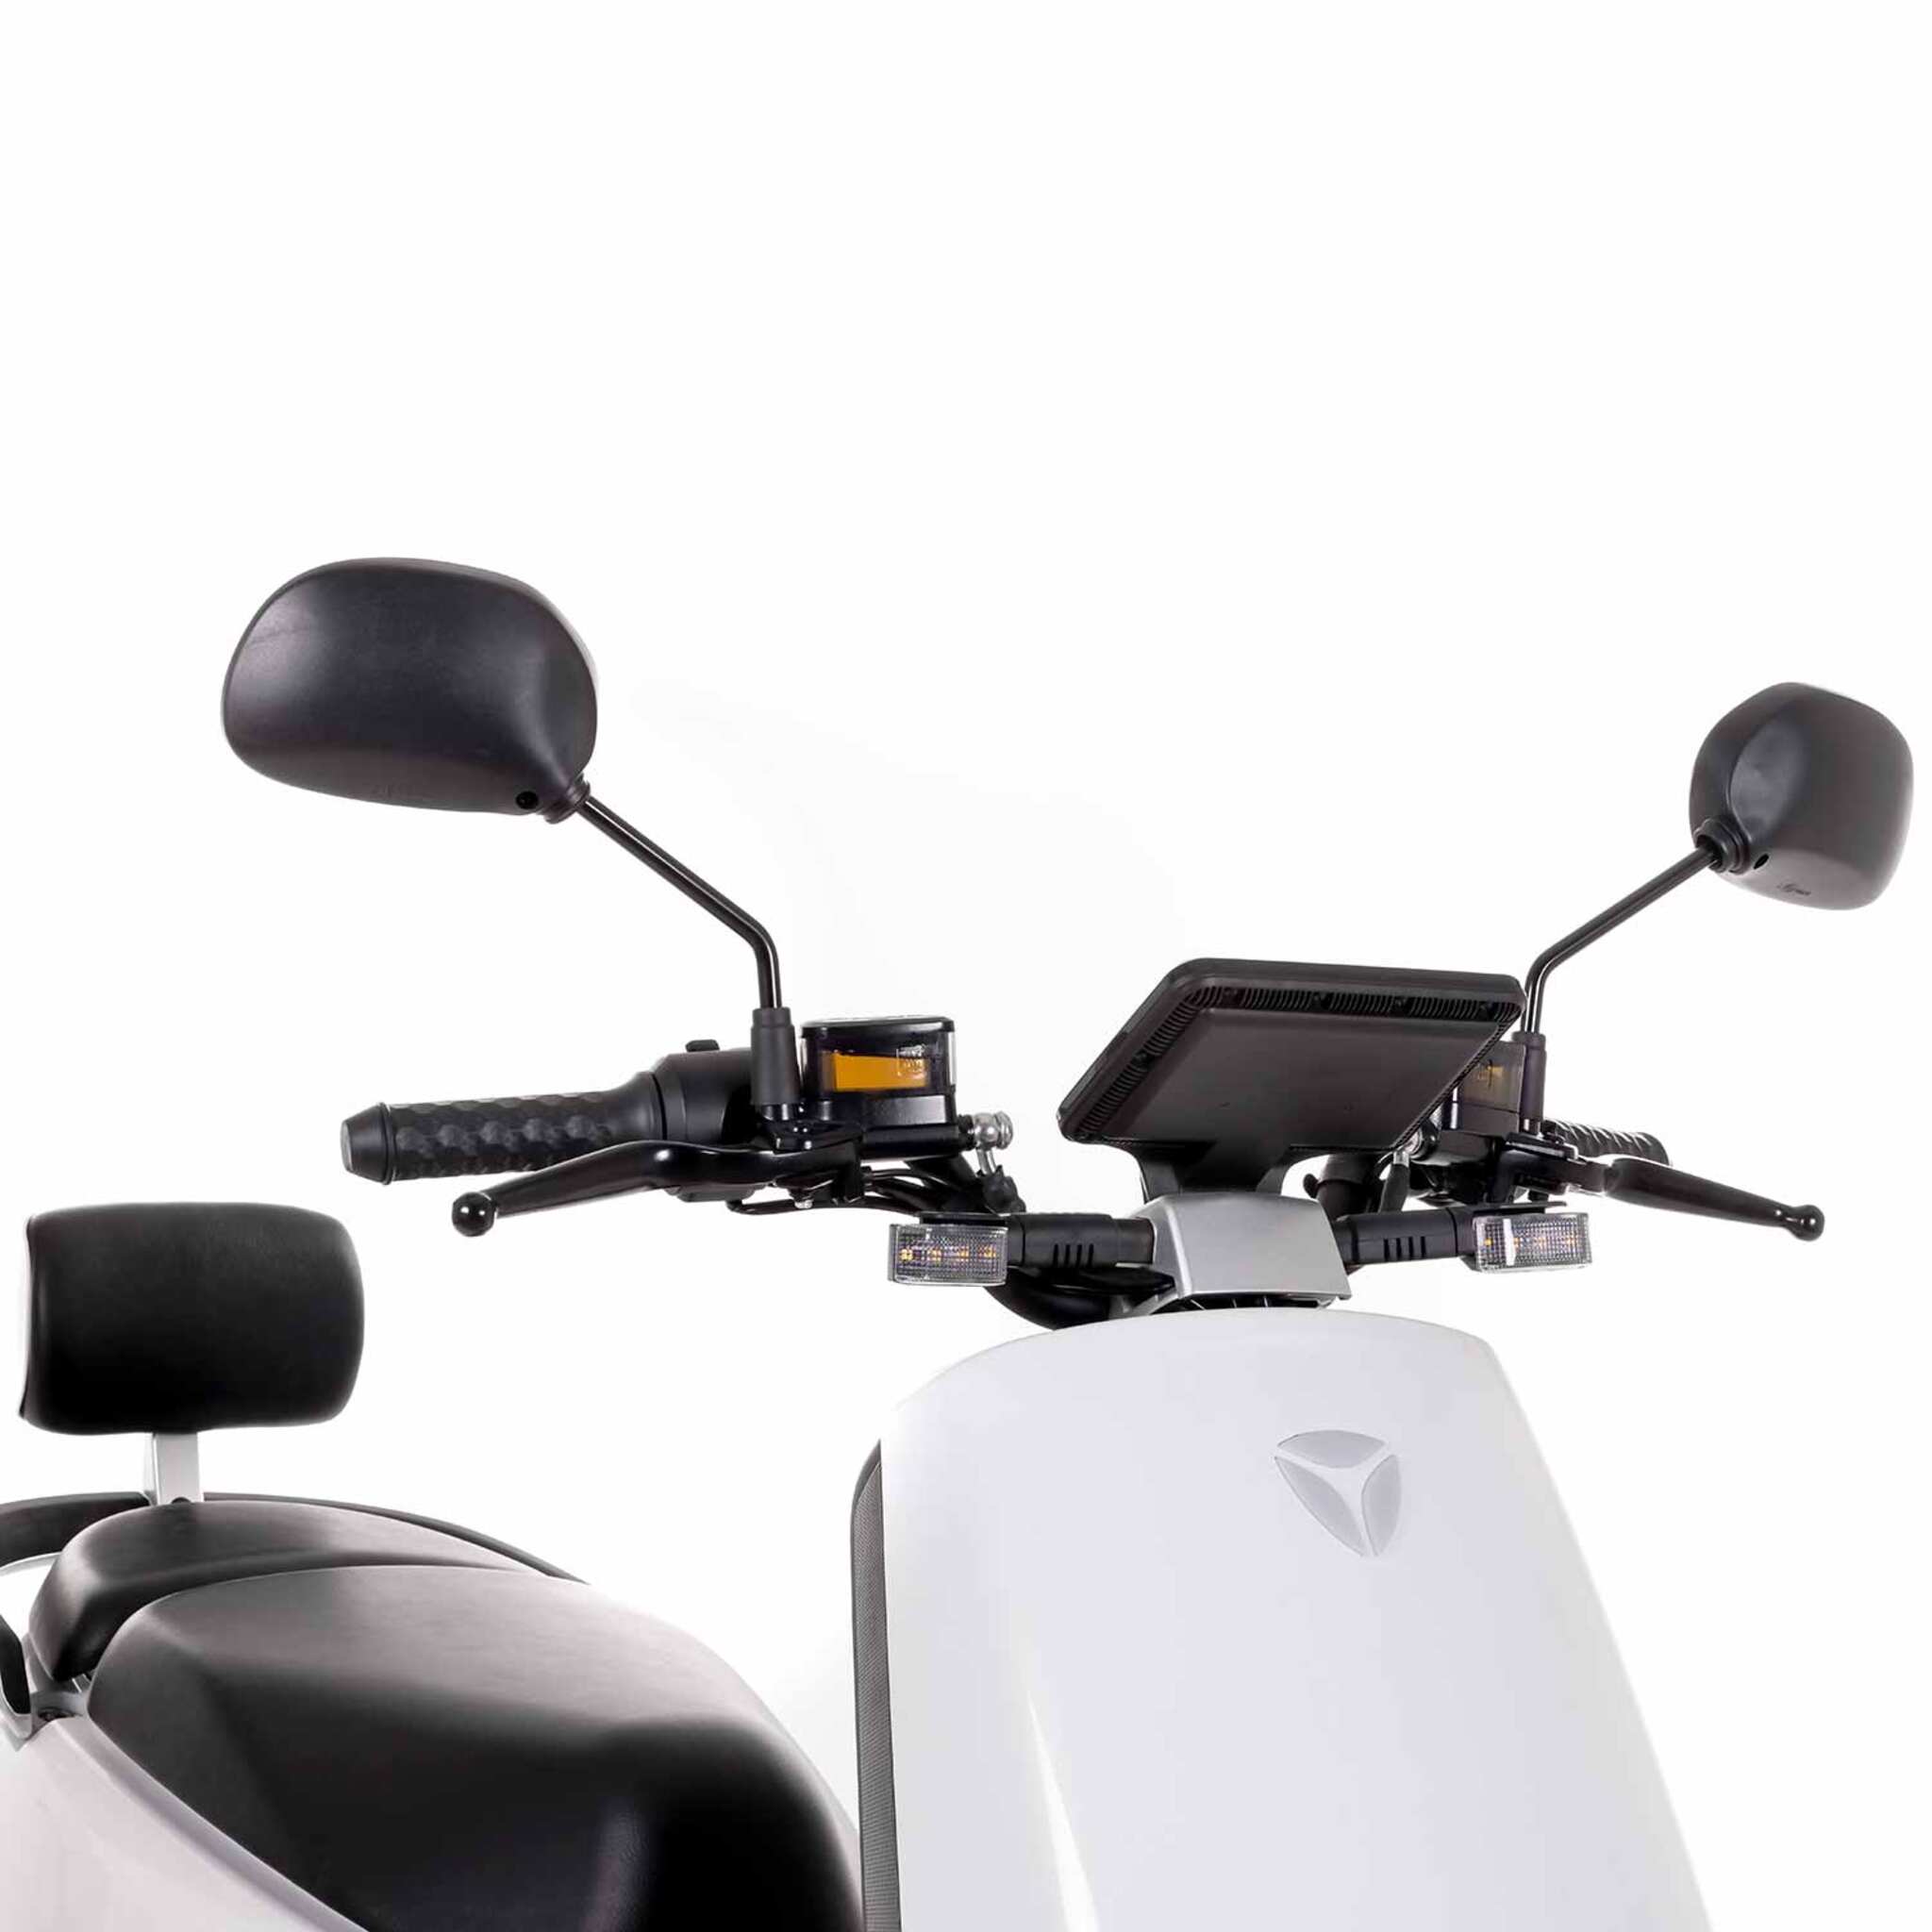 stylischer - und 45km/h MabeaMobility Yadea – G5 E-Roller moderner SXT